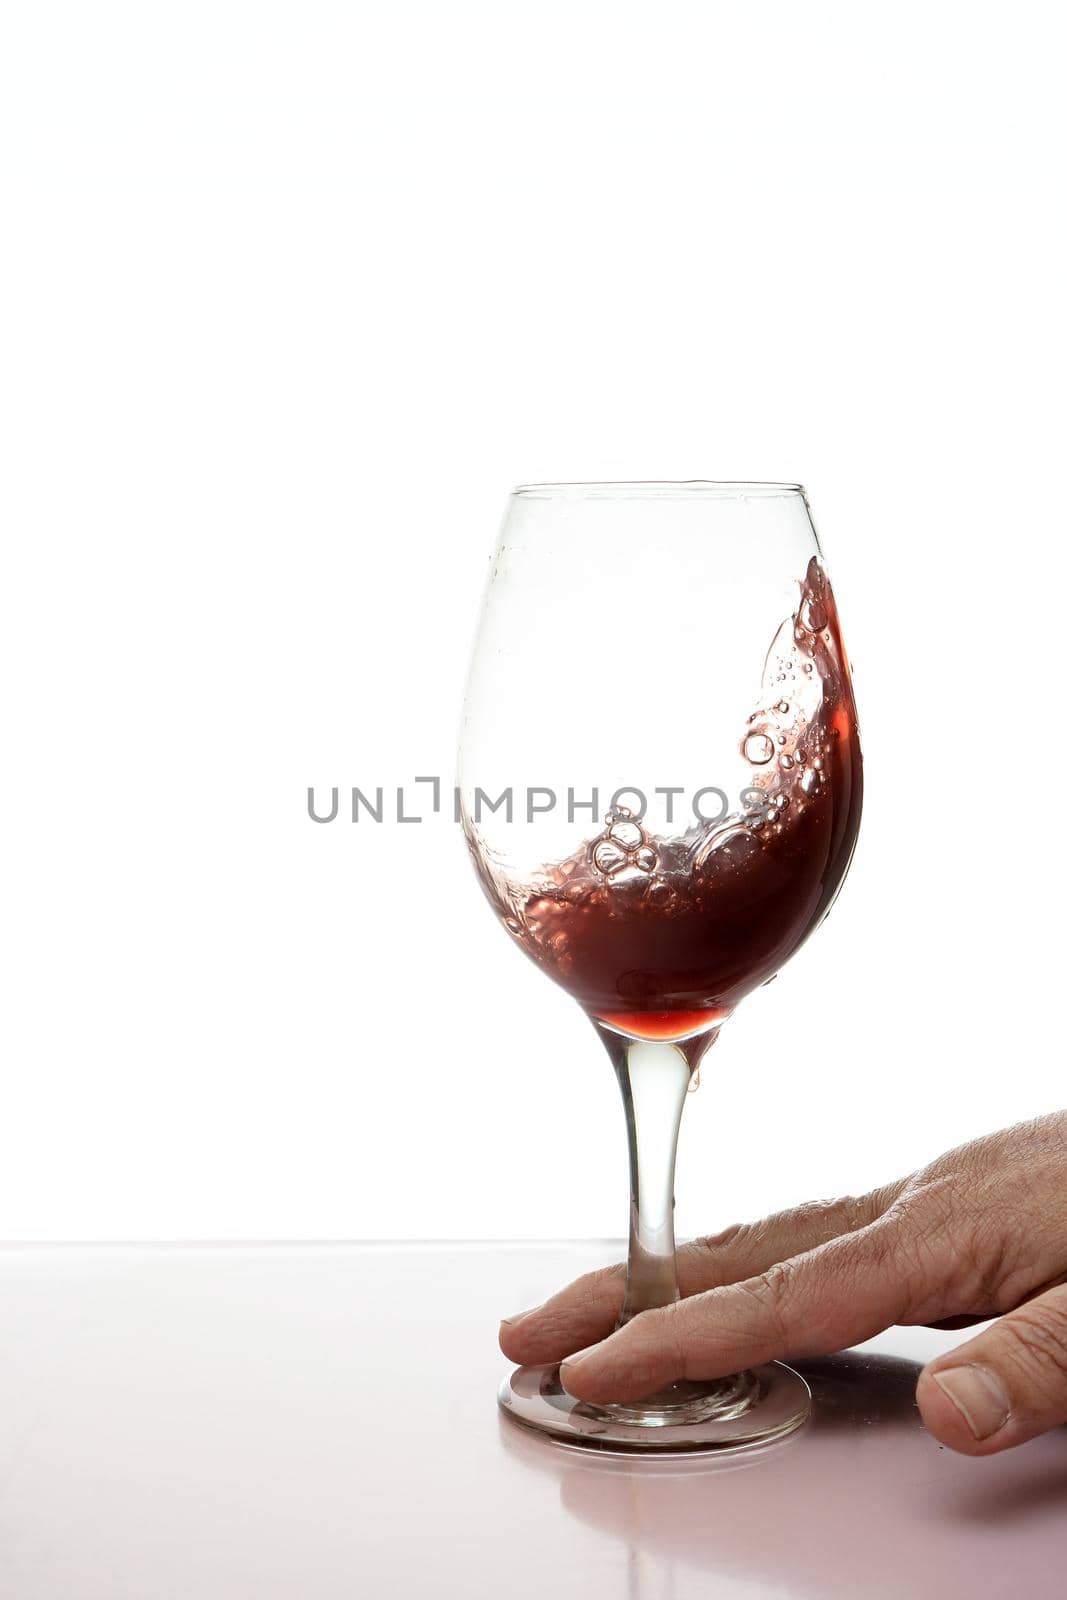 Glass of red wine splashing isolated. by hdcaputo